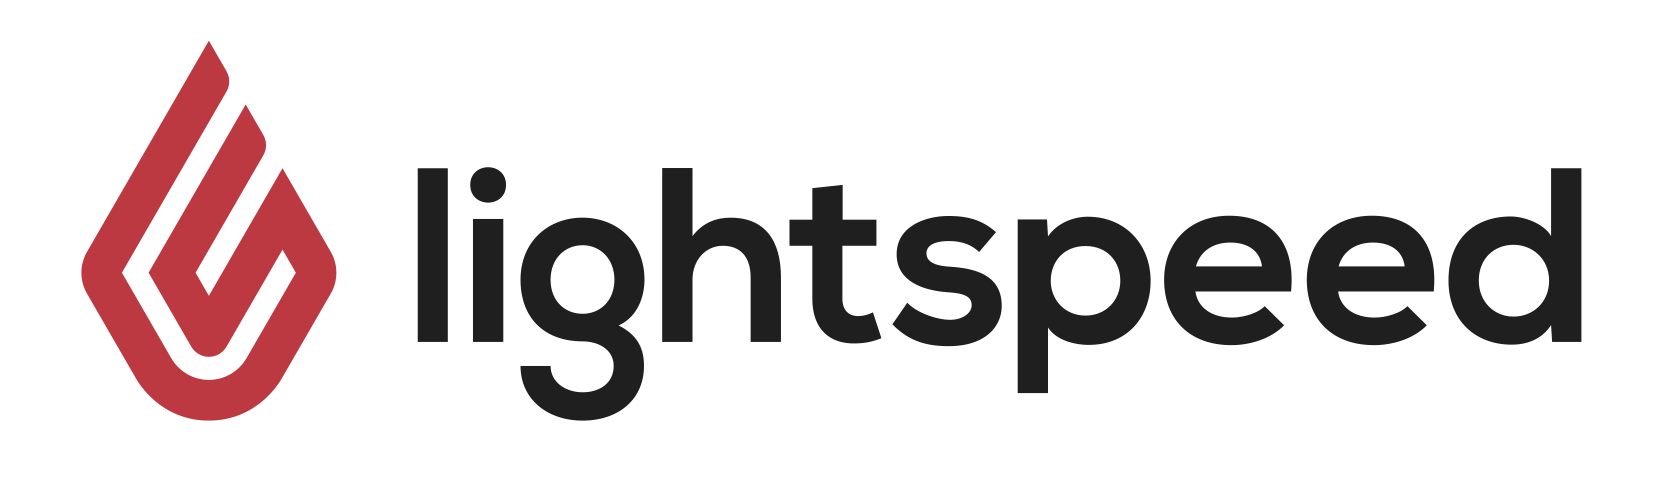 lightspeed-logo.png